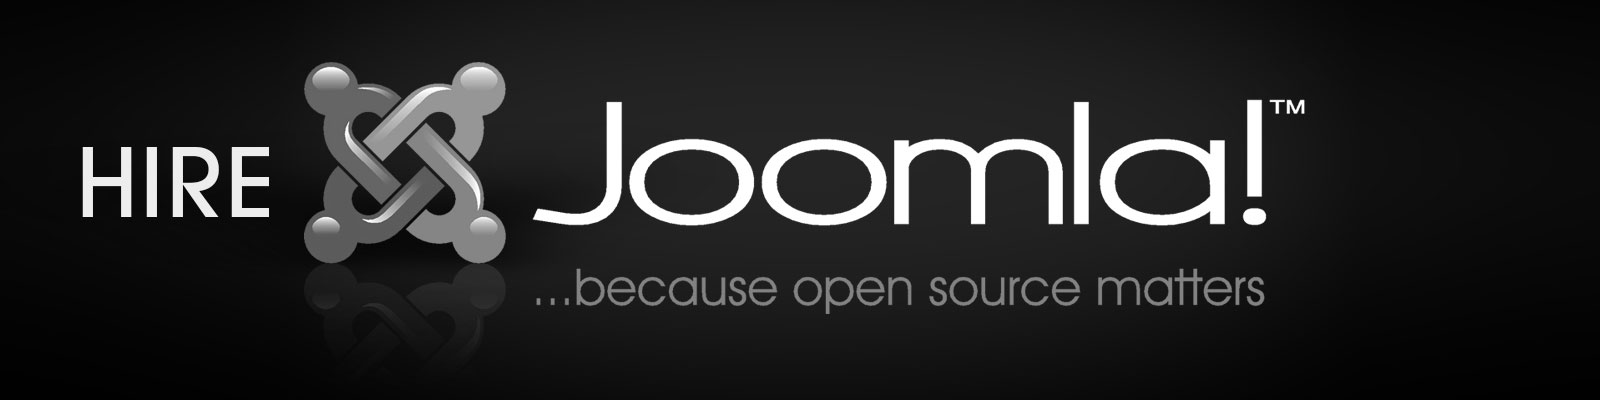 hire joomla developer